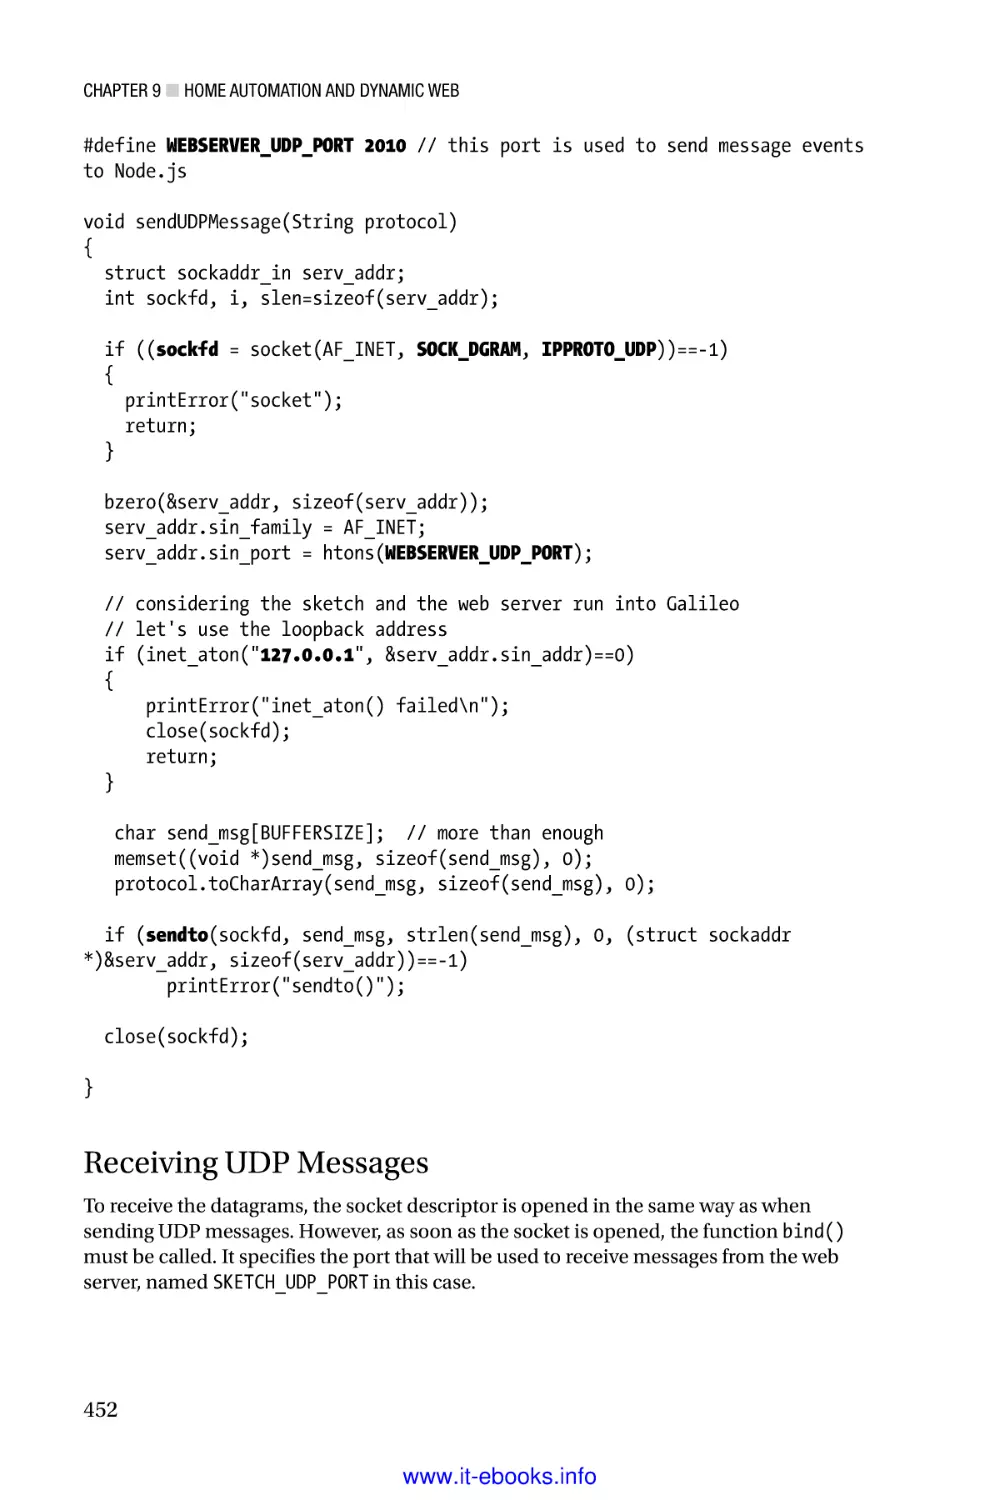 Receiving UDP Messages